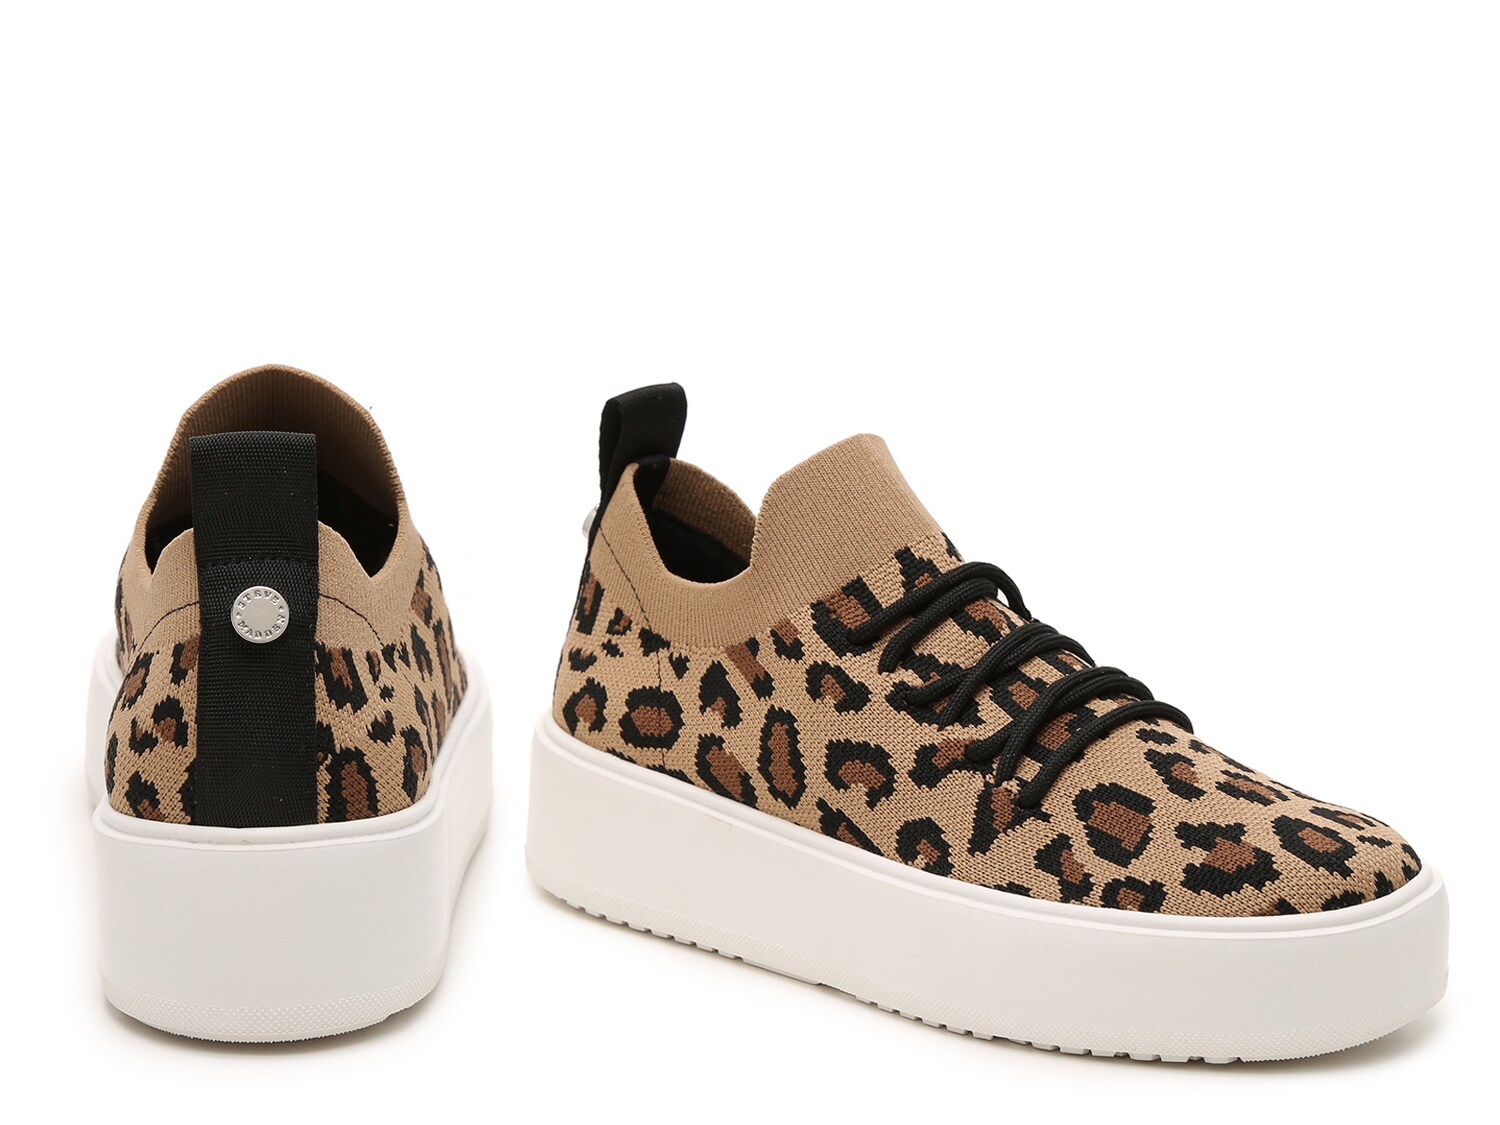 dsw leopard boots